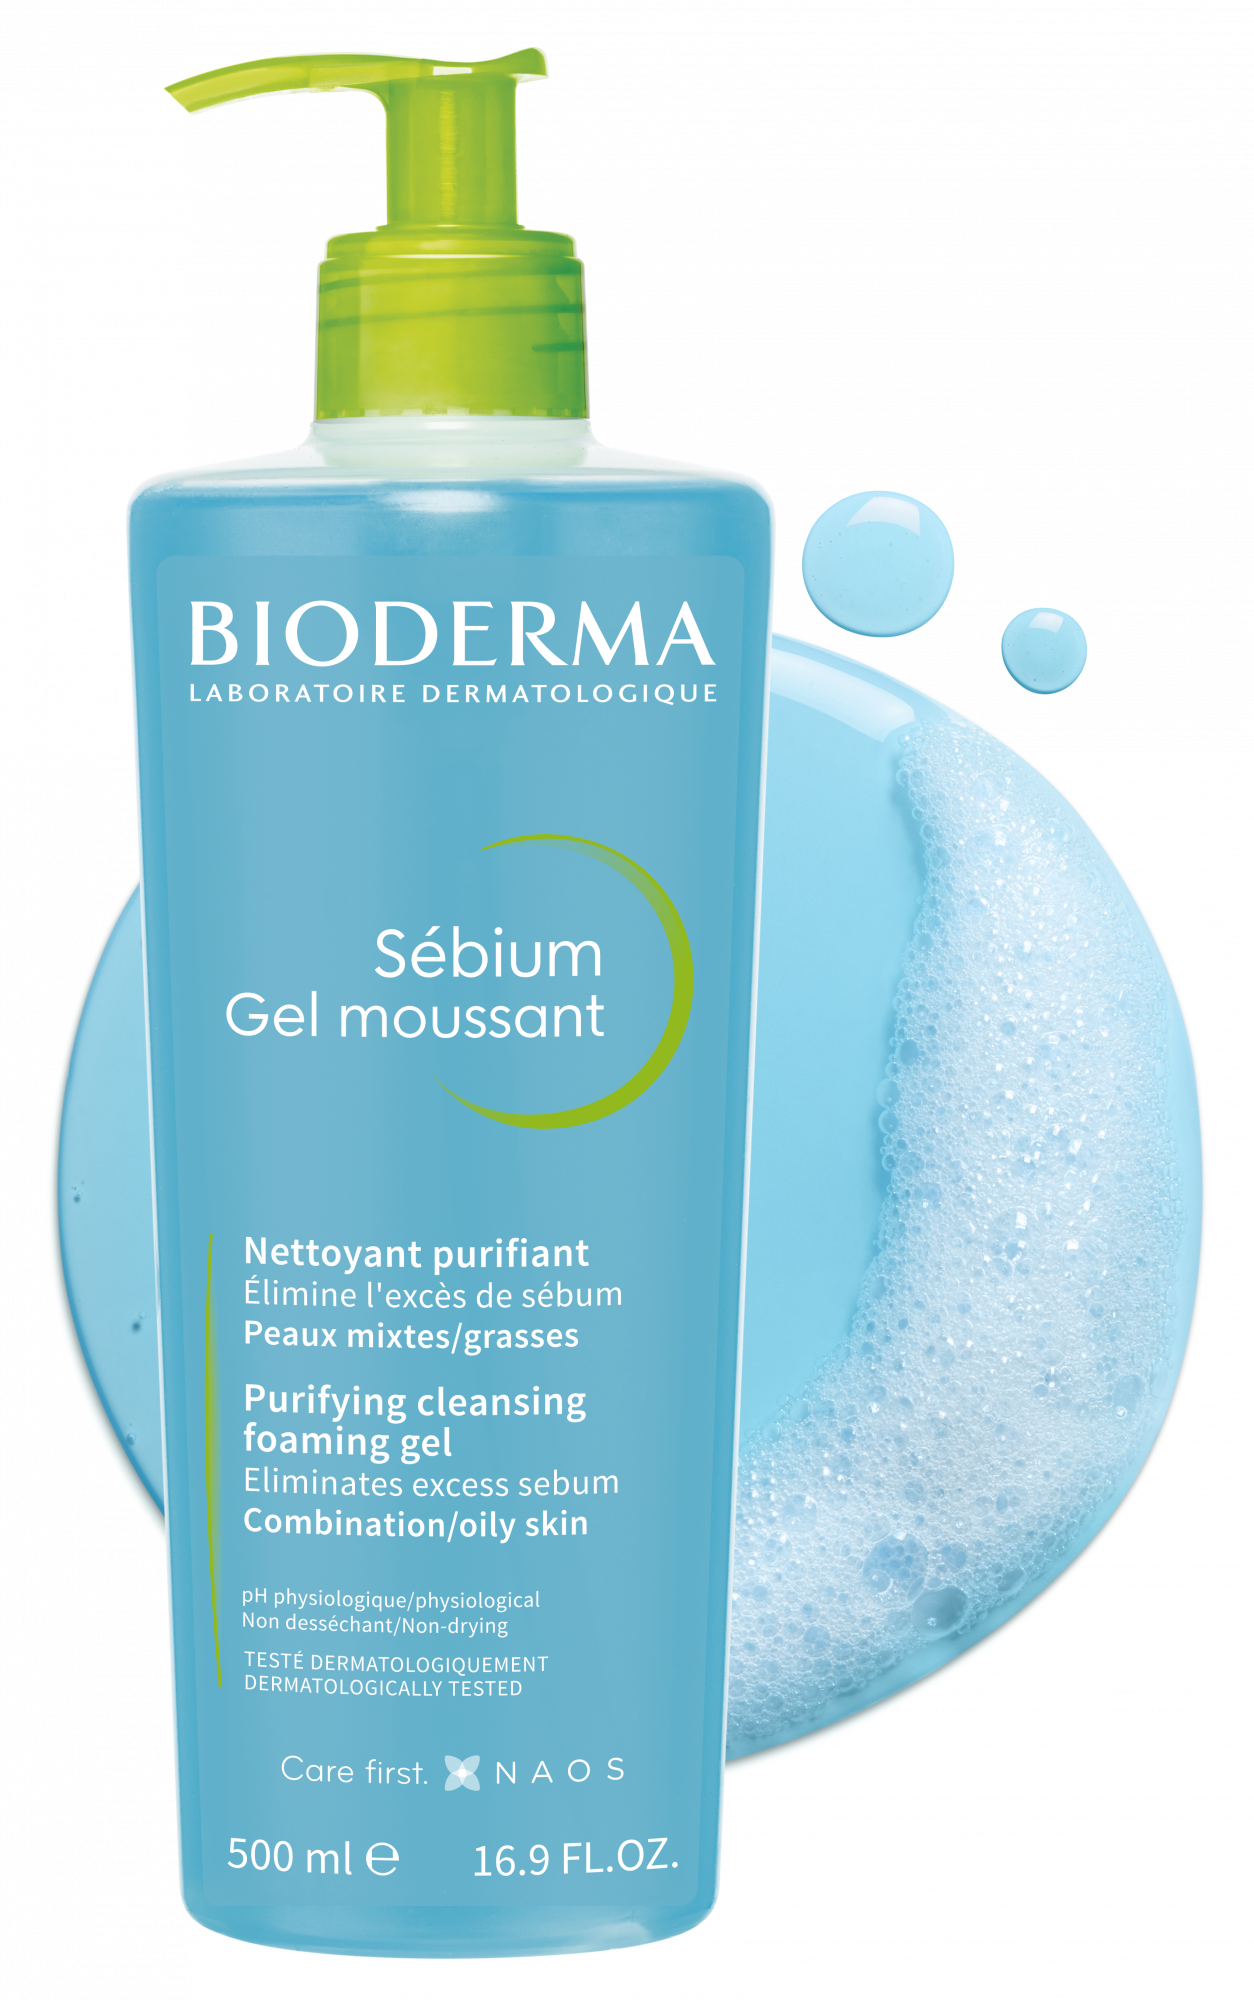 Bioderma Sebium Foaming Gel 16.9 fl oz 500 ml. Facial Cleanser